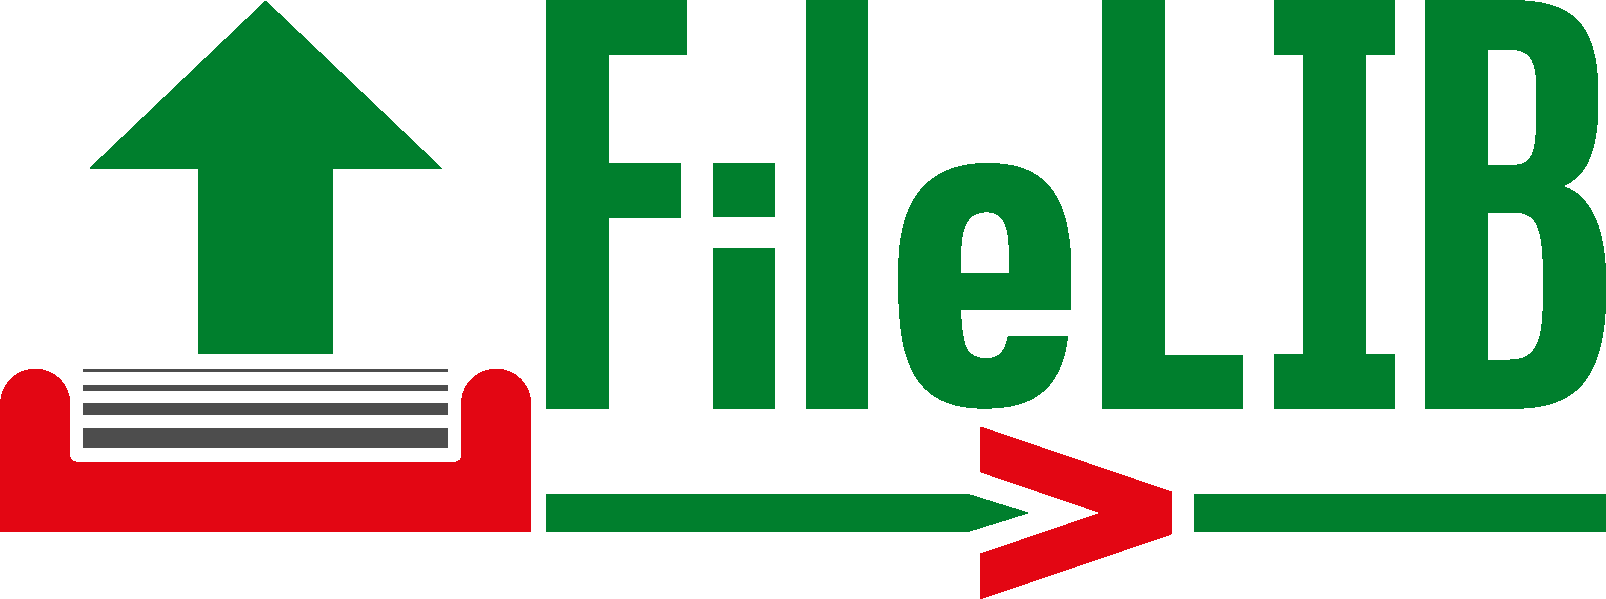 Filelib feature image